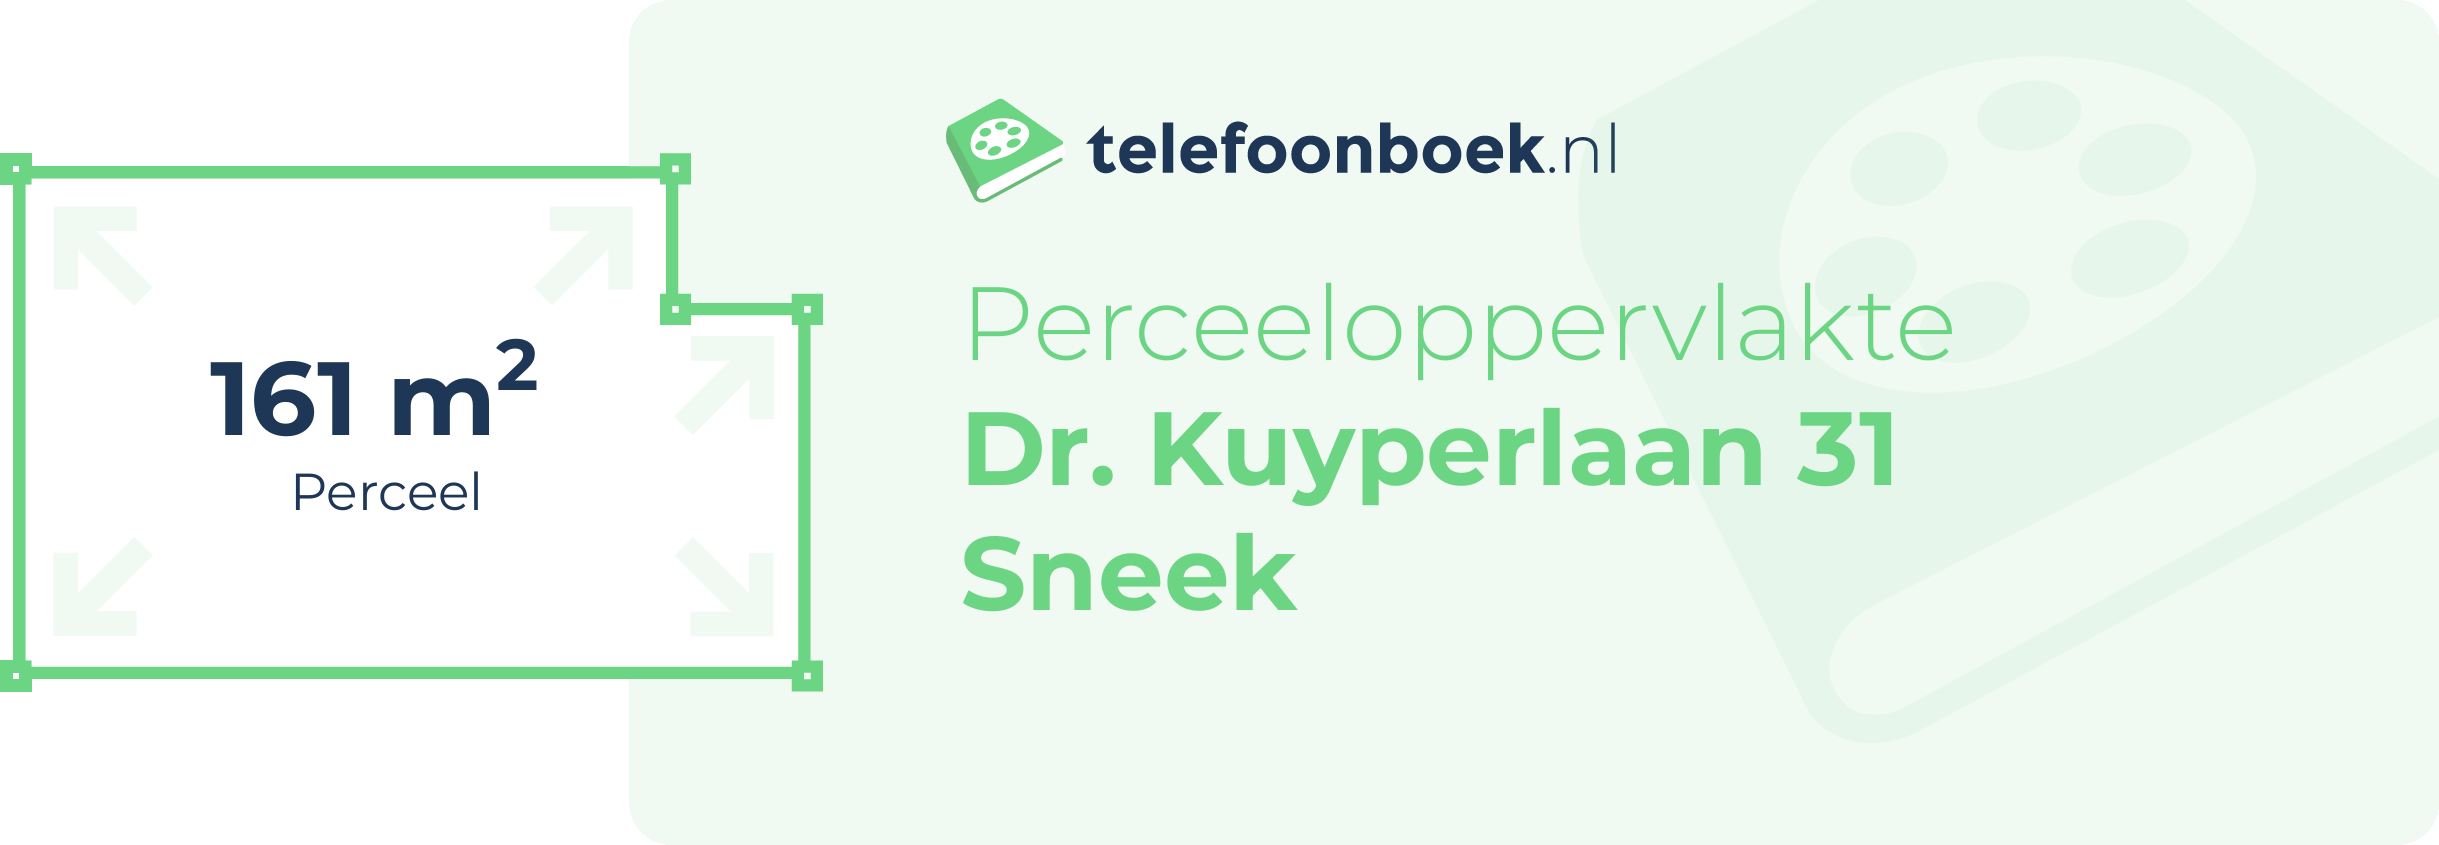 Perceeloppervlakte Dr. Kuyperlaan 31 Sneek